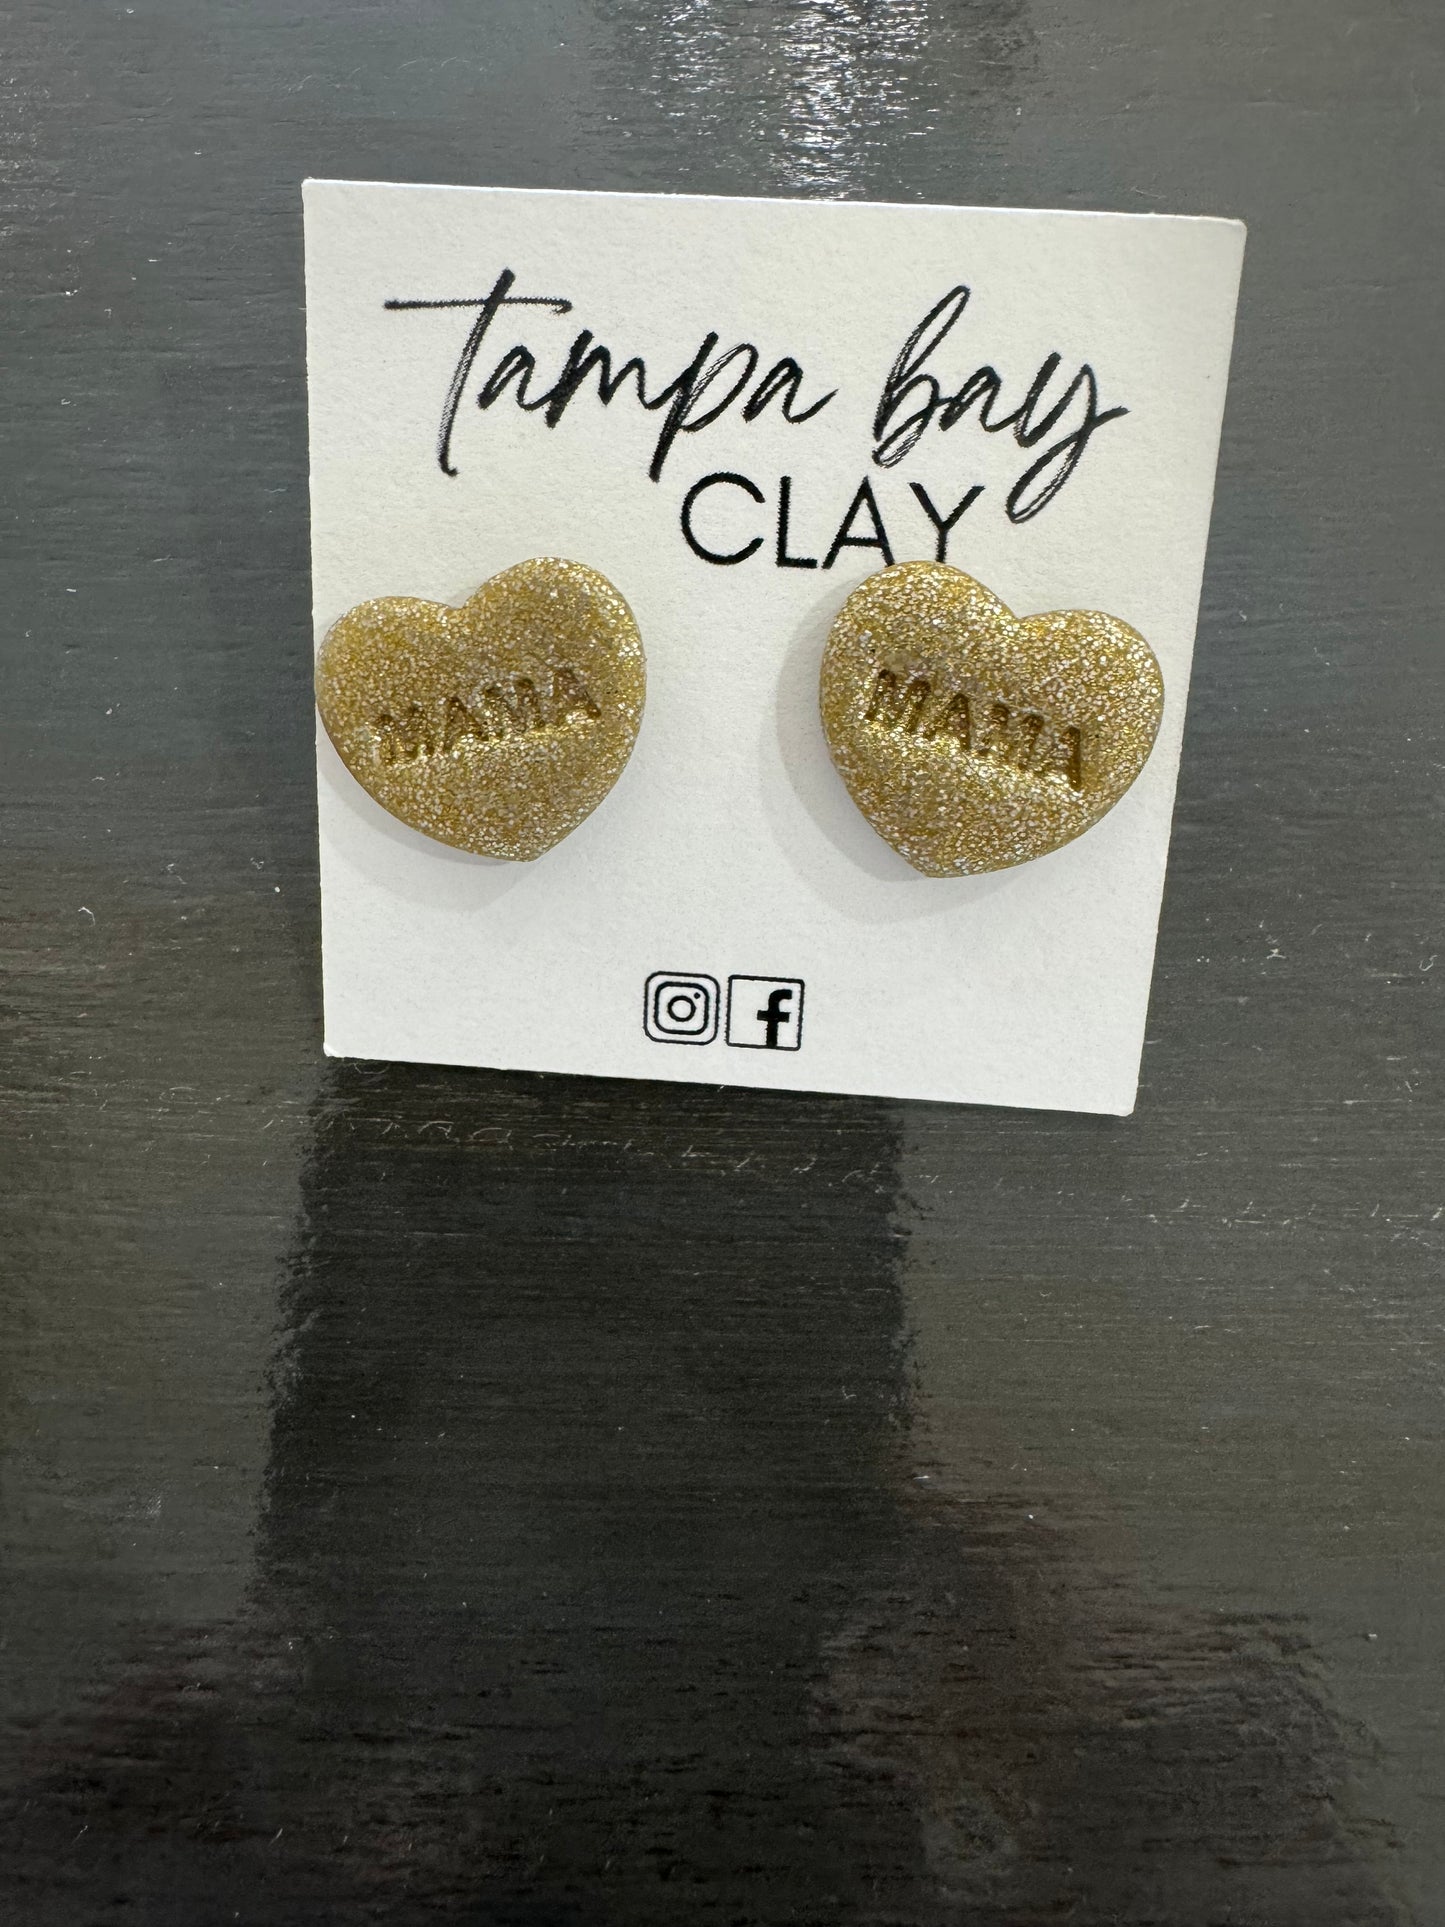 Locally made clay earrings